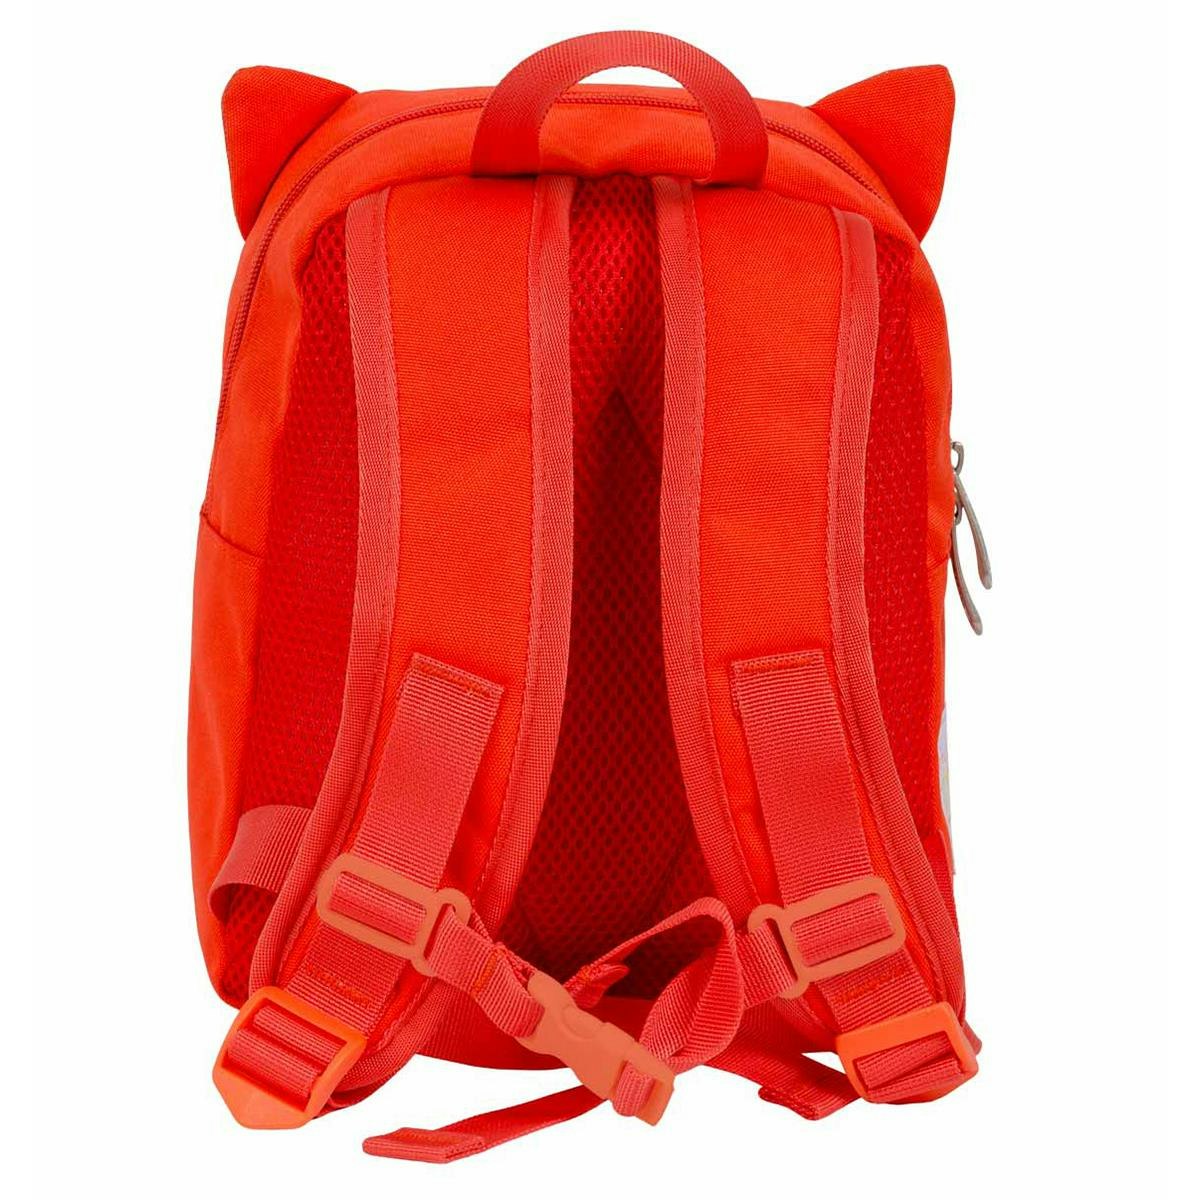 Liten ryggsäck - Räv, Little backpack - Fox